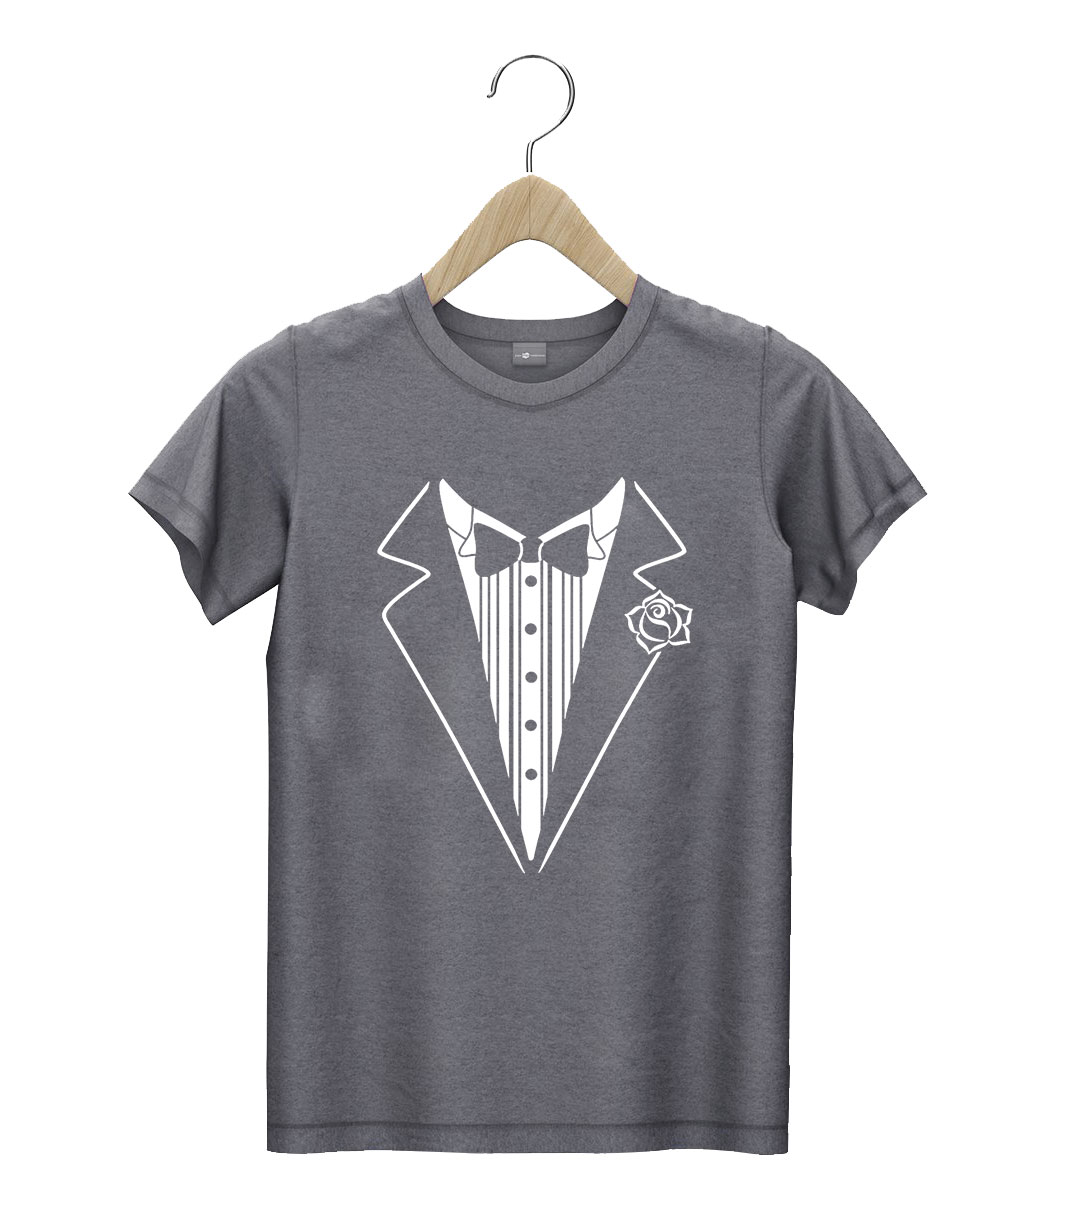 tuxedo bow tie t shirt tux wedding shirt